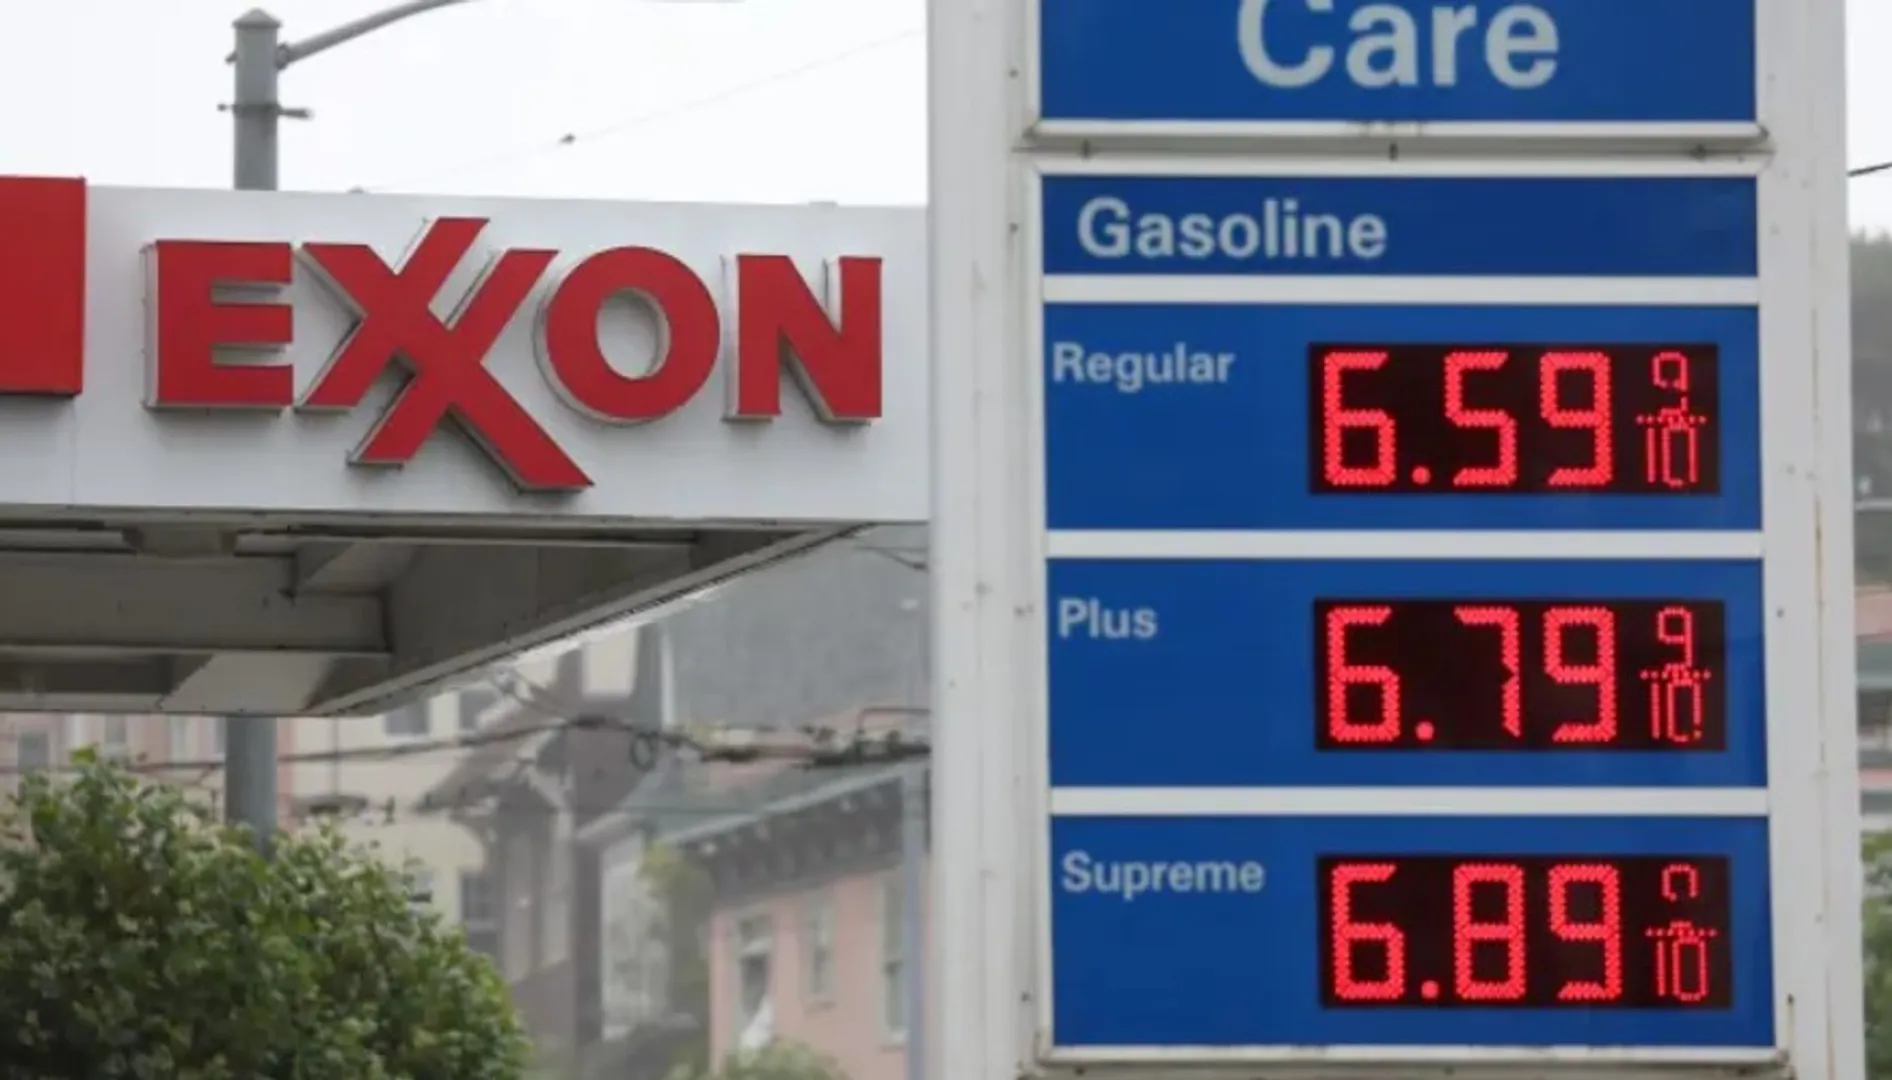 California suit against Chevron, Exxon, Shell, others, alleges public deception on climate change https://www.cnbc.com/2023/09/18/california-sues-chevron-exxon-oil-giants-on-climate-change-deception.html 

#ClimateChange  #Environment  #Chevron  #Exxon  #Shell  #CNBC 